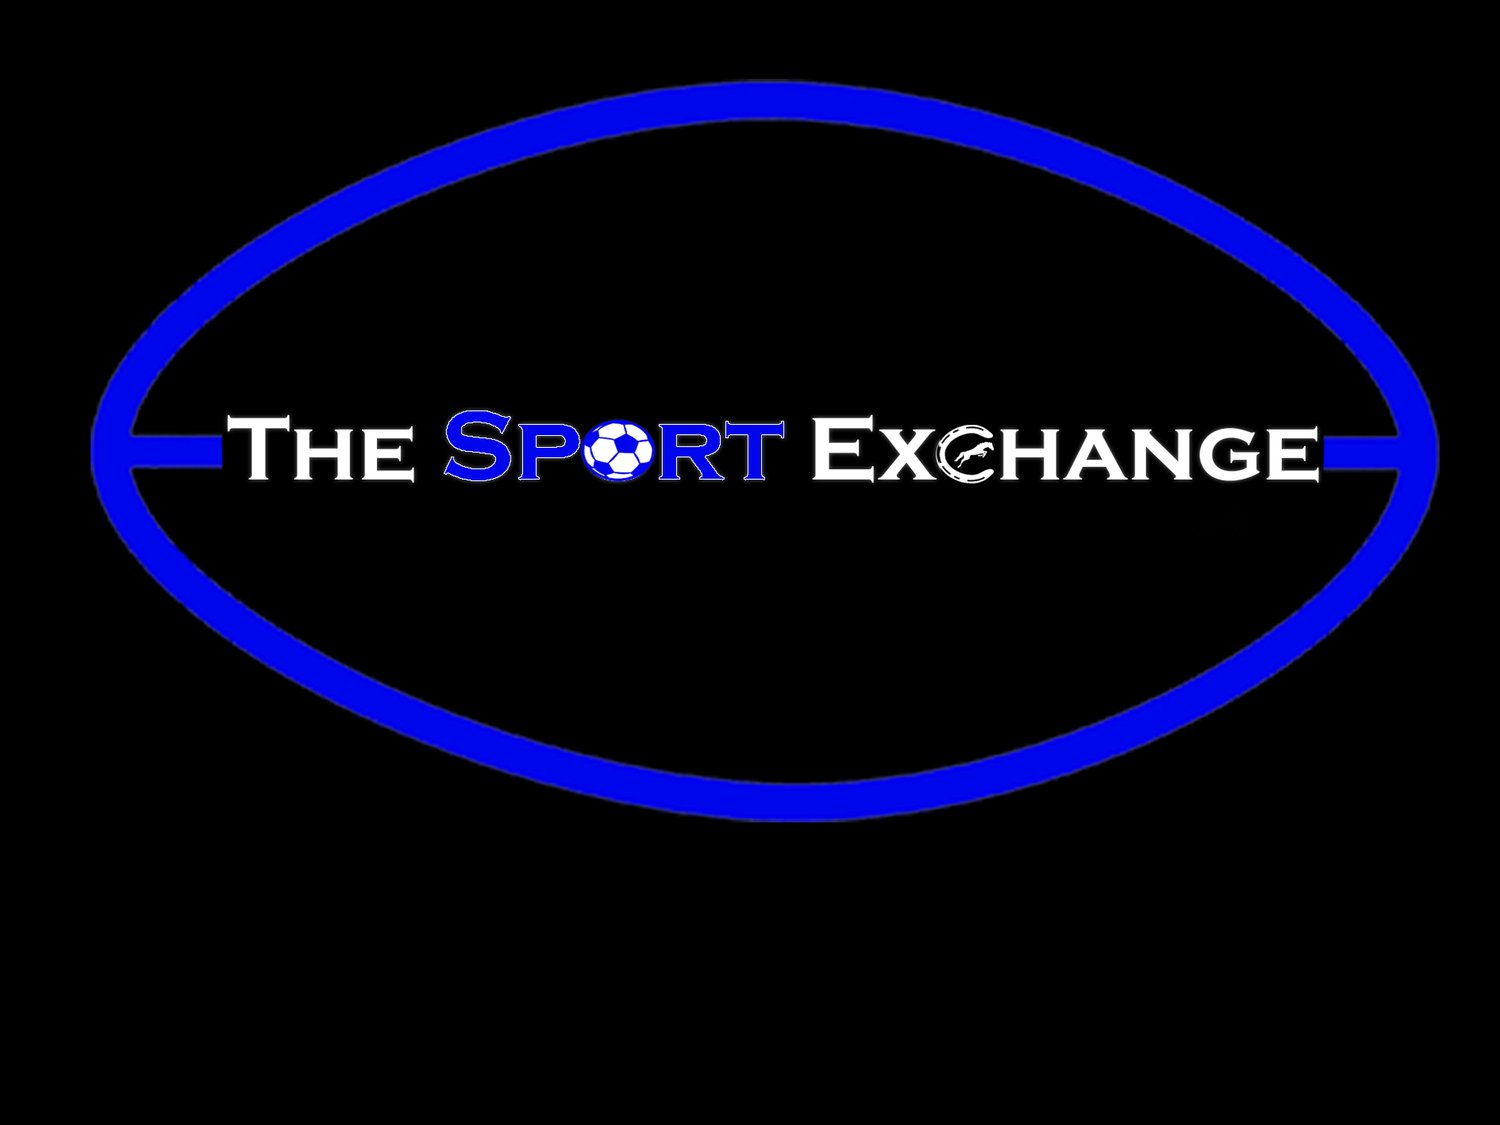 The Sport Exchange